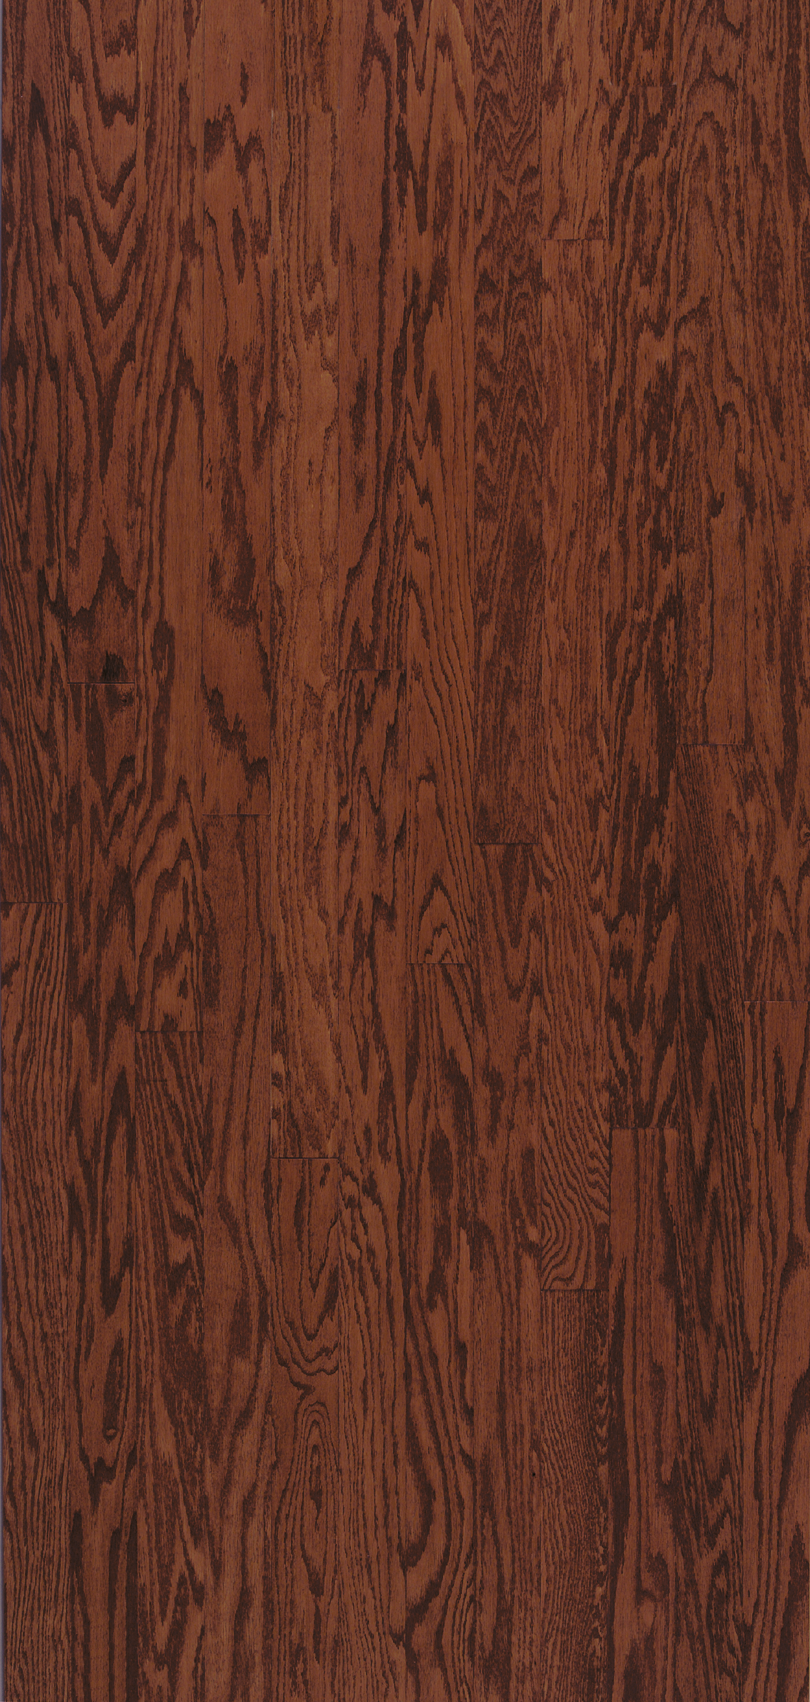 Red Oak Engineered Hardwood E538ee, Bruce Oak Cherry Hardwood Flooring